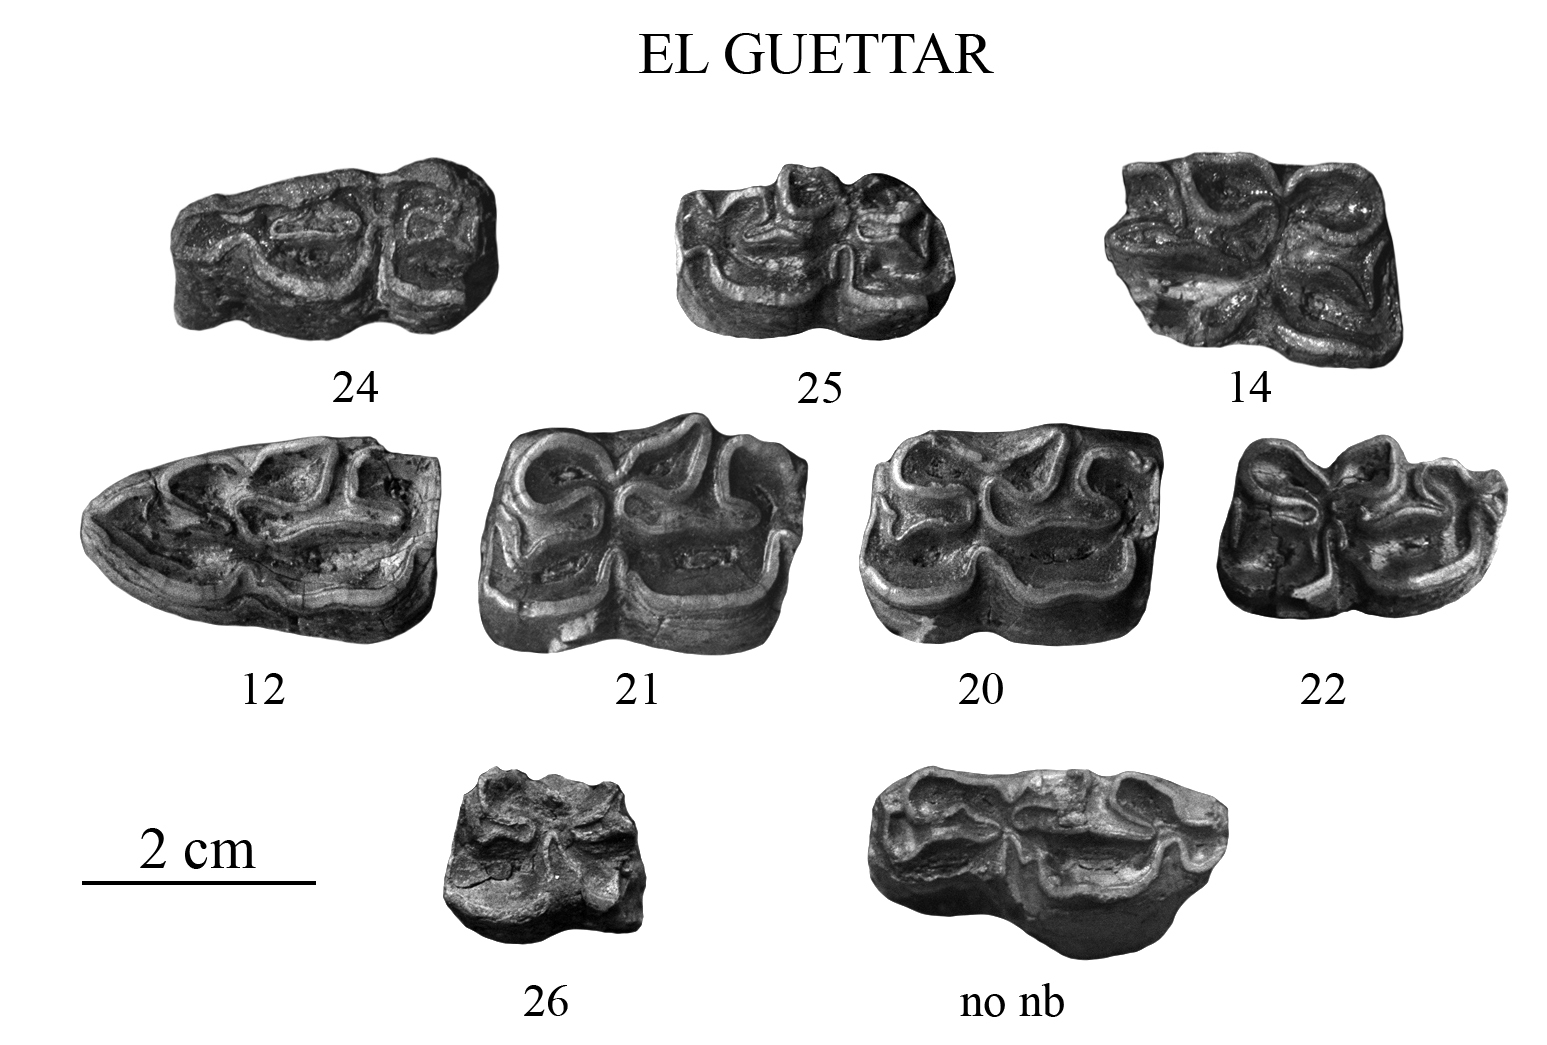 El Guettar, Lower cheek teeth